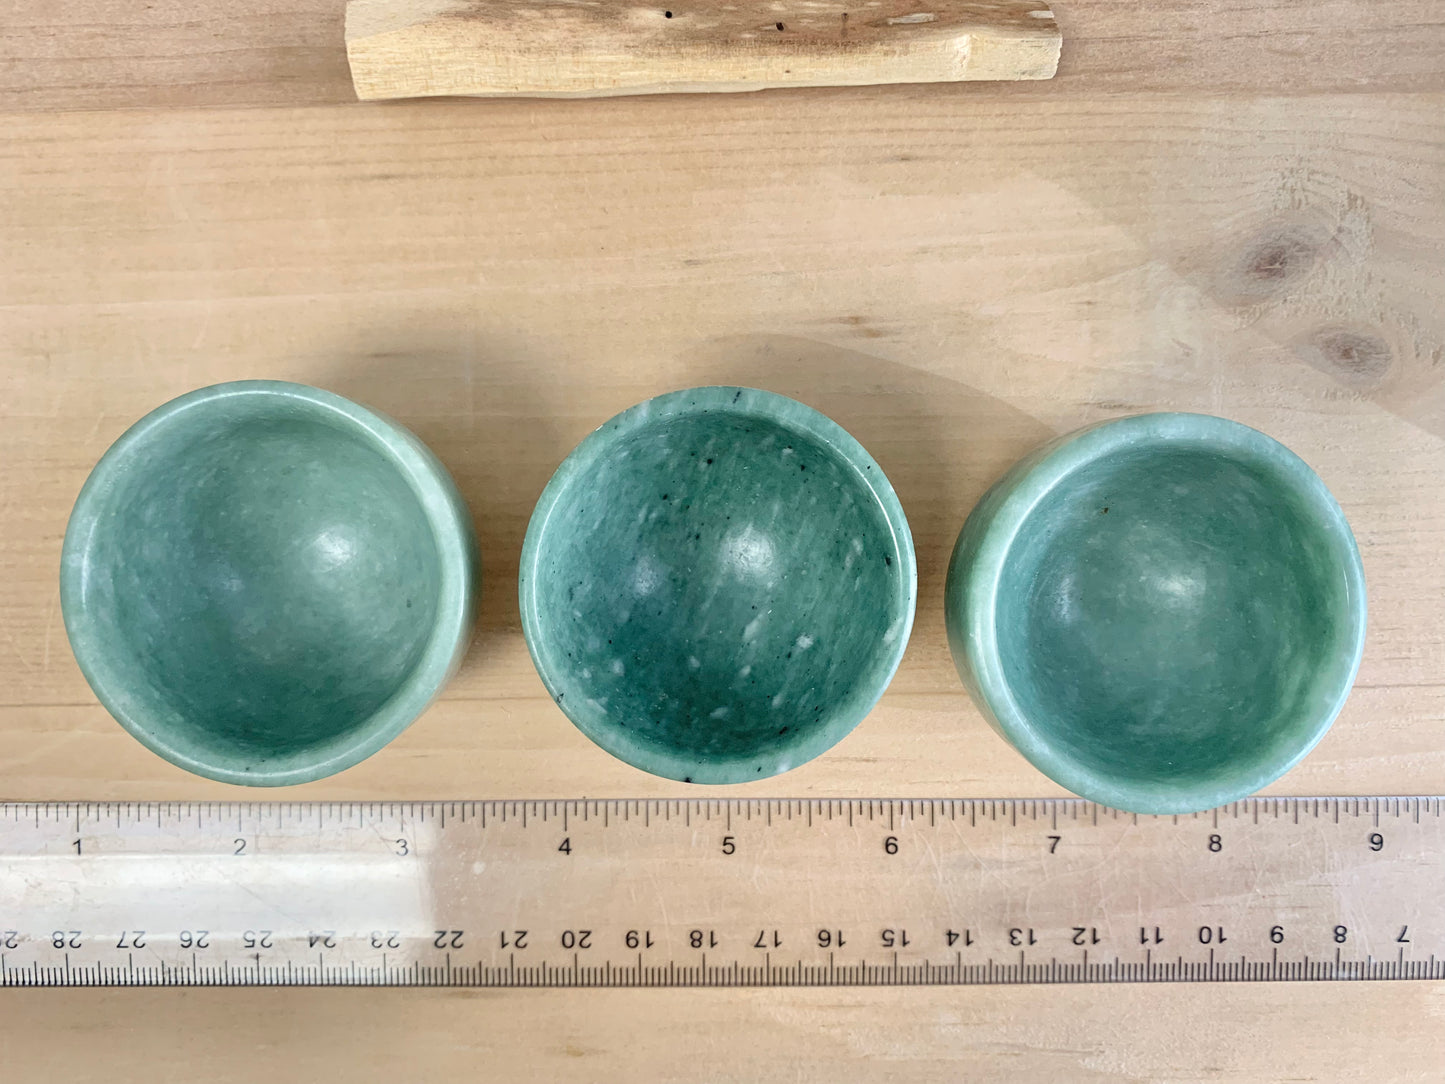 Green Jade Bowl, 2"